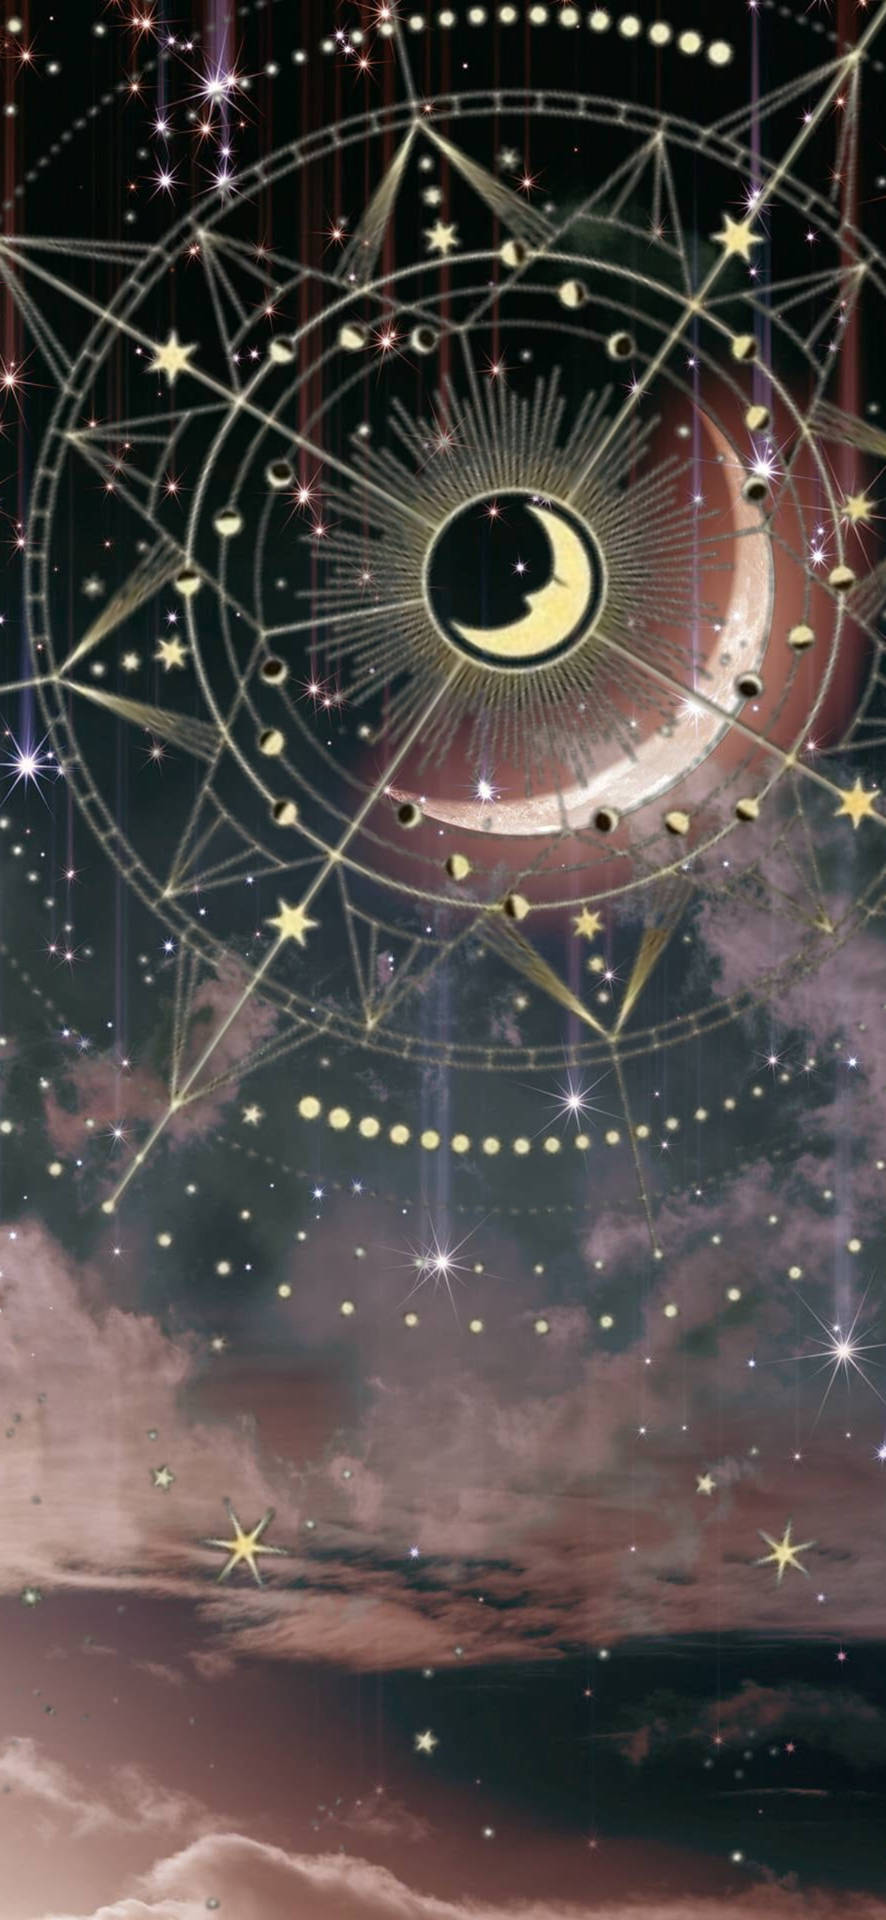 Spiritual Aesthetic Circle Moon Phase Background